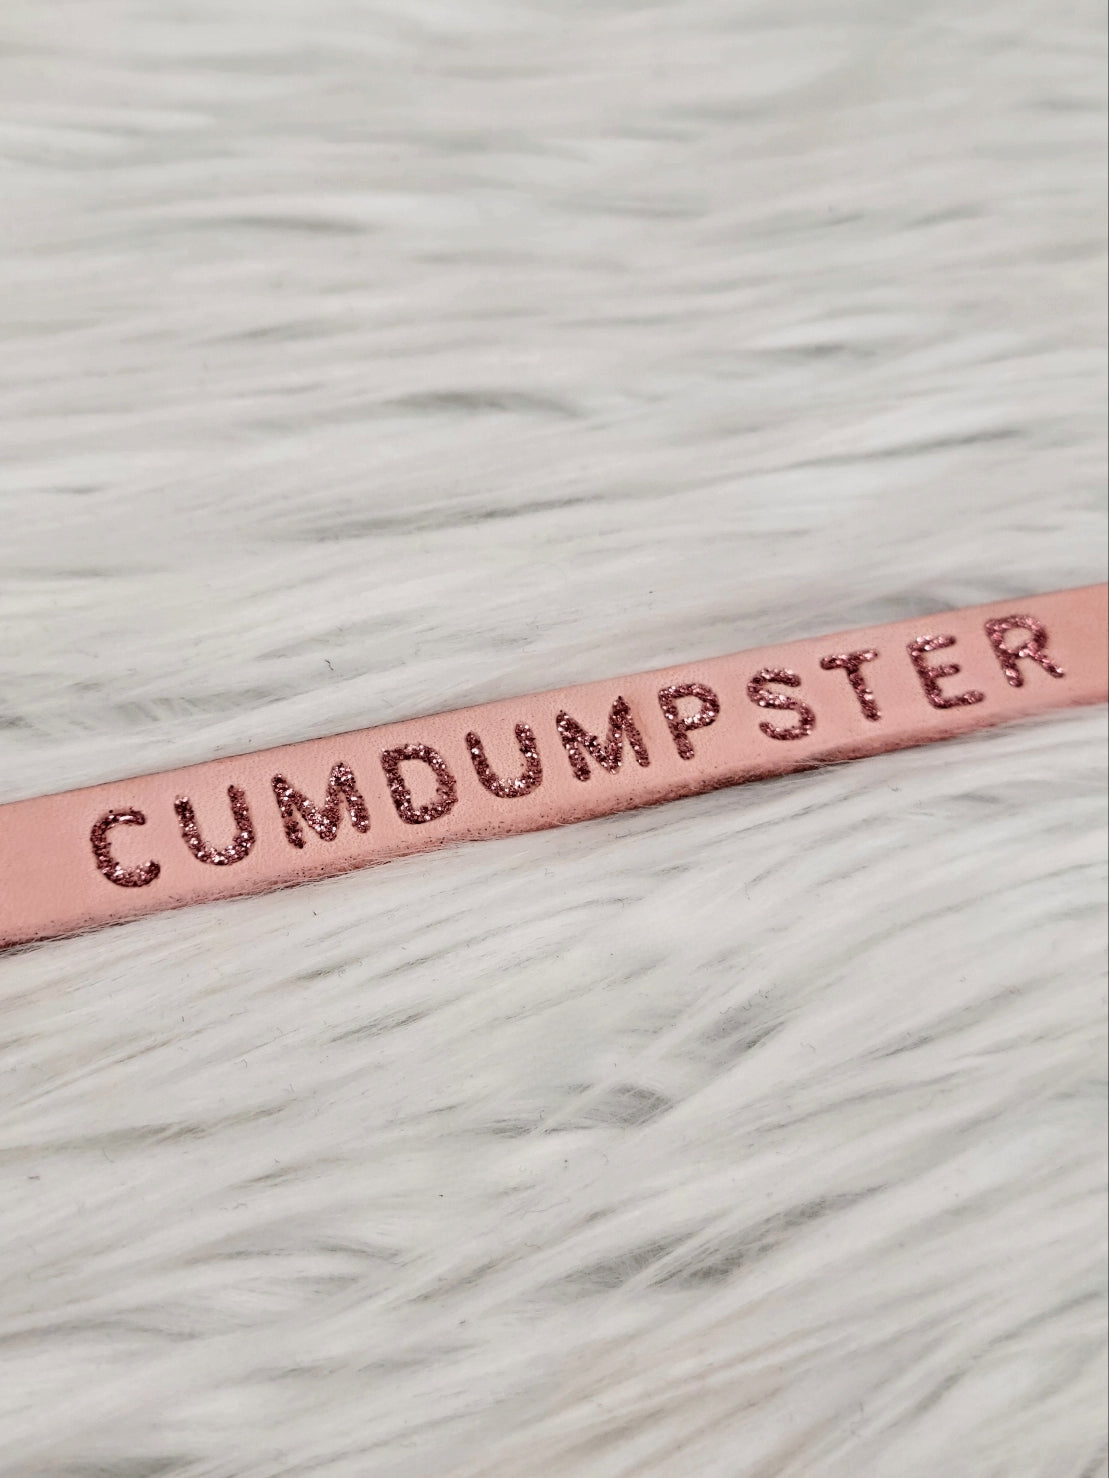 CumDumpster